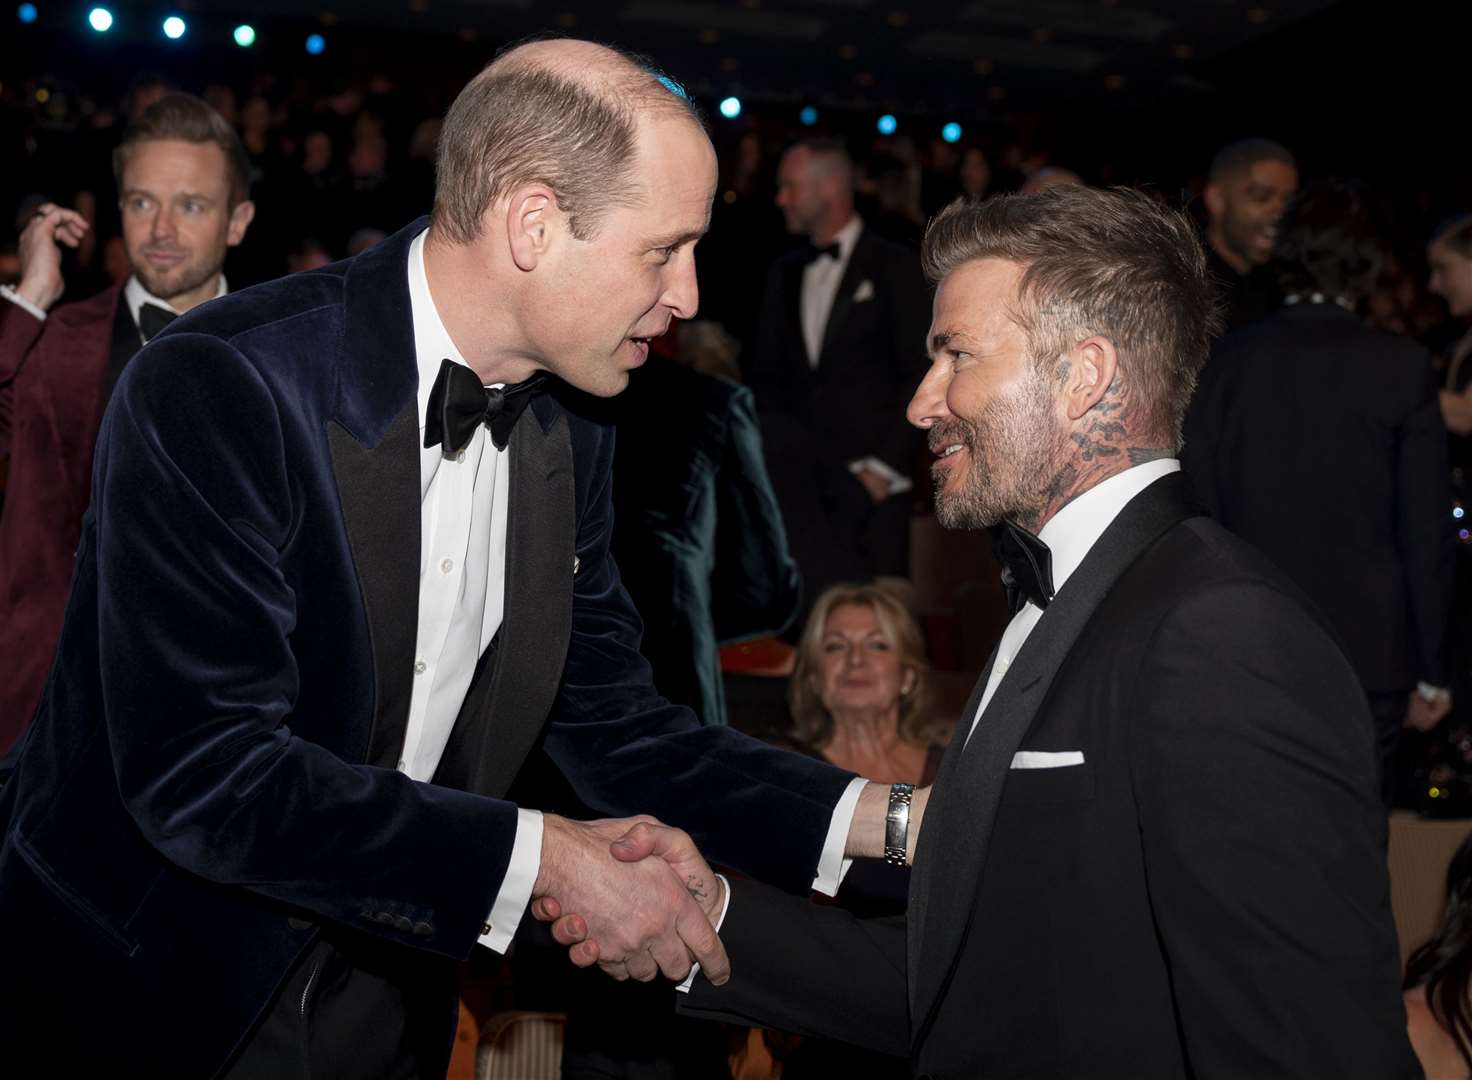 William greeted former footballer David Beckham before the ceremony got under way (Jordan Pettitt/PA)